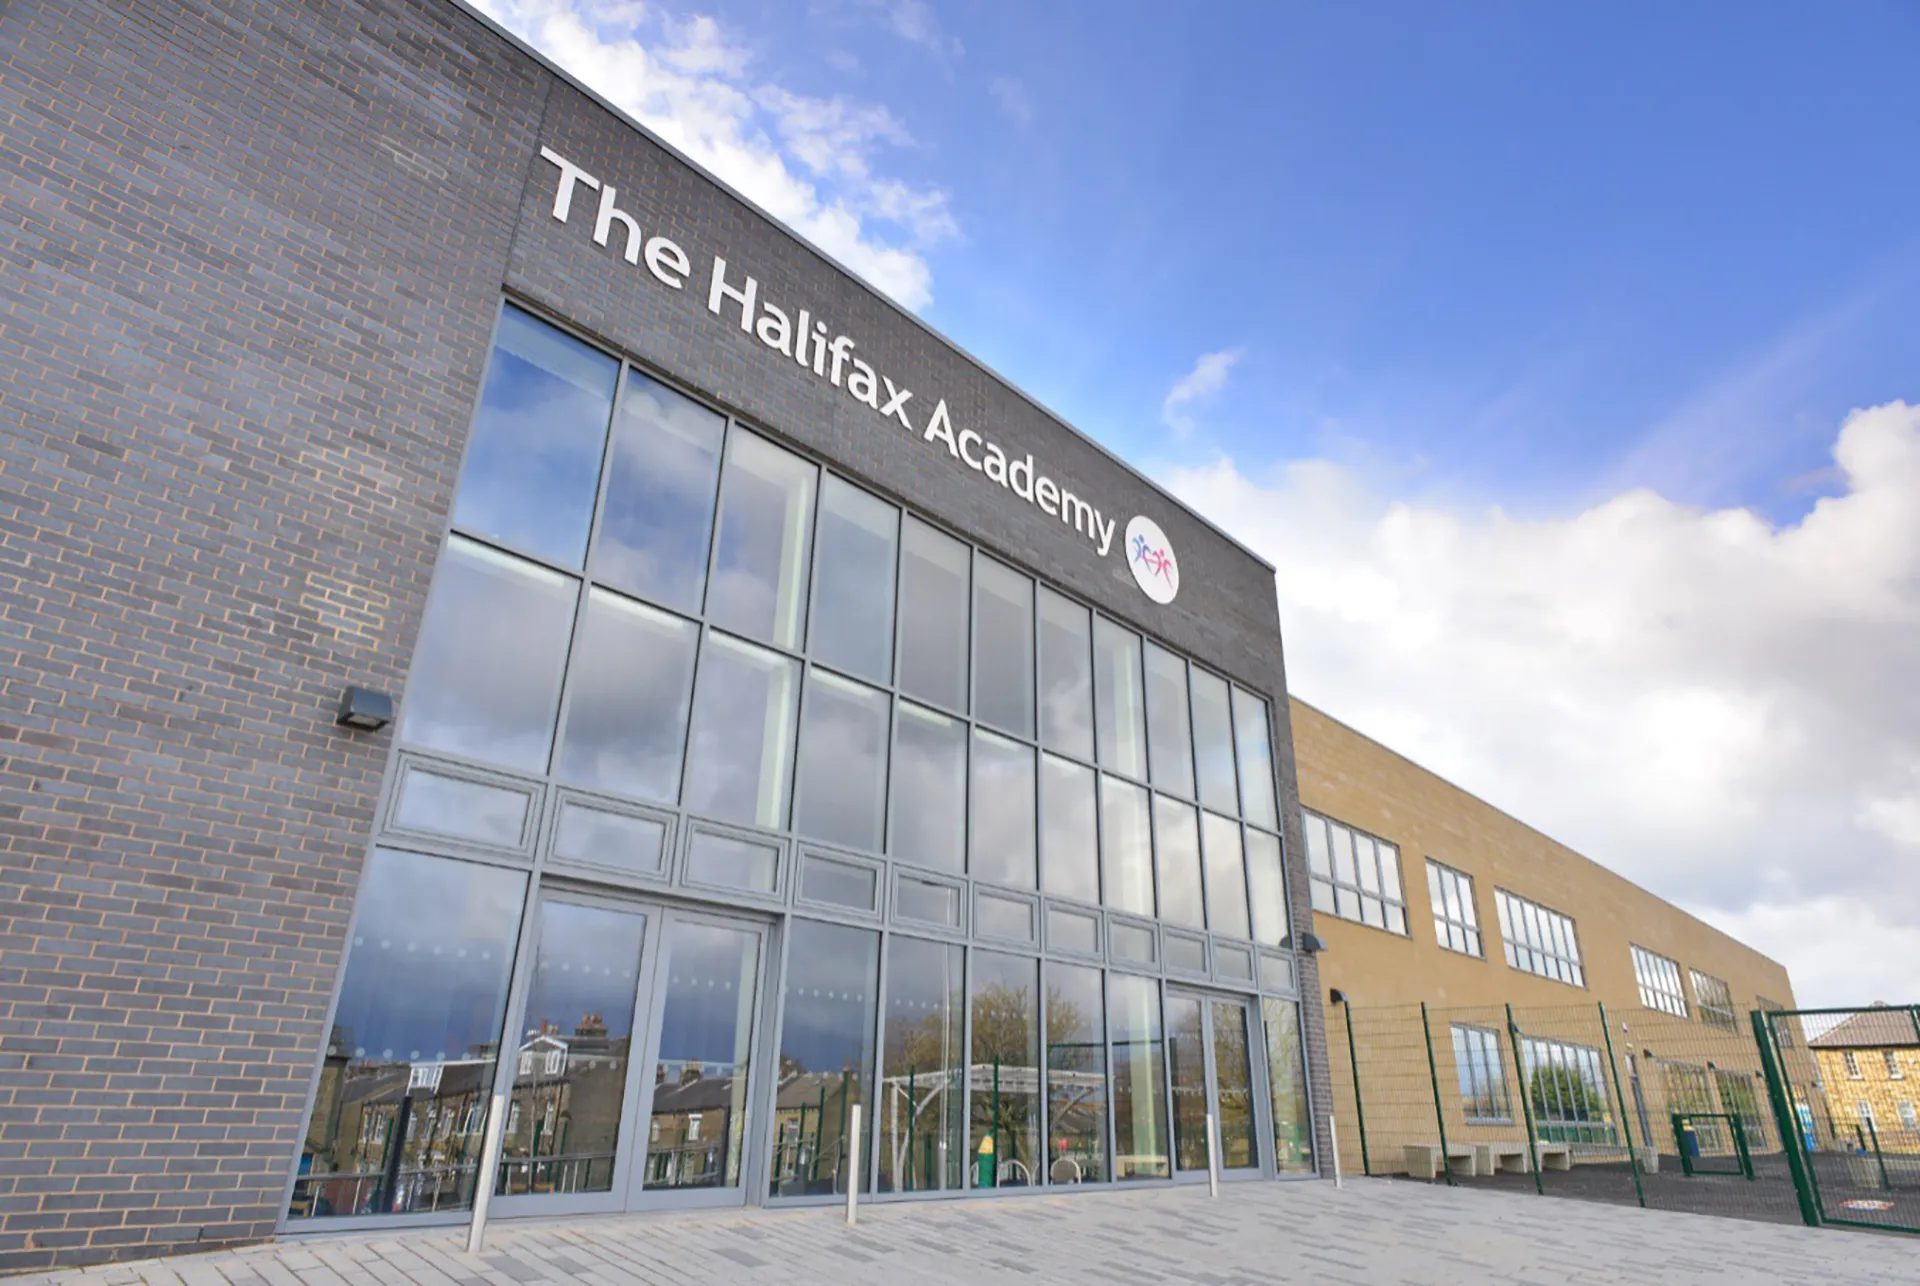 Halifax Academy